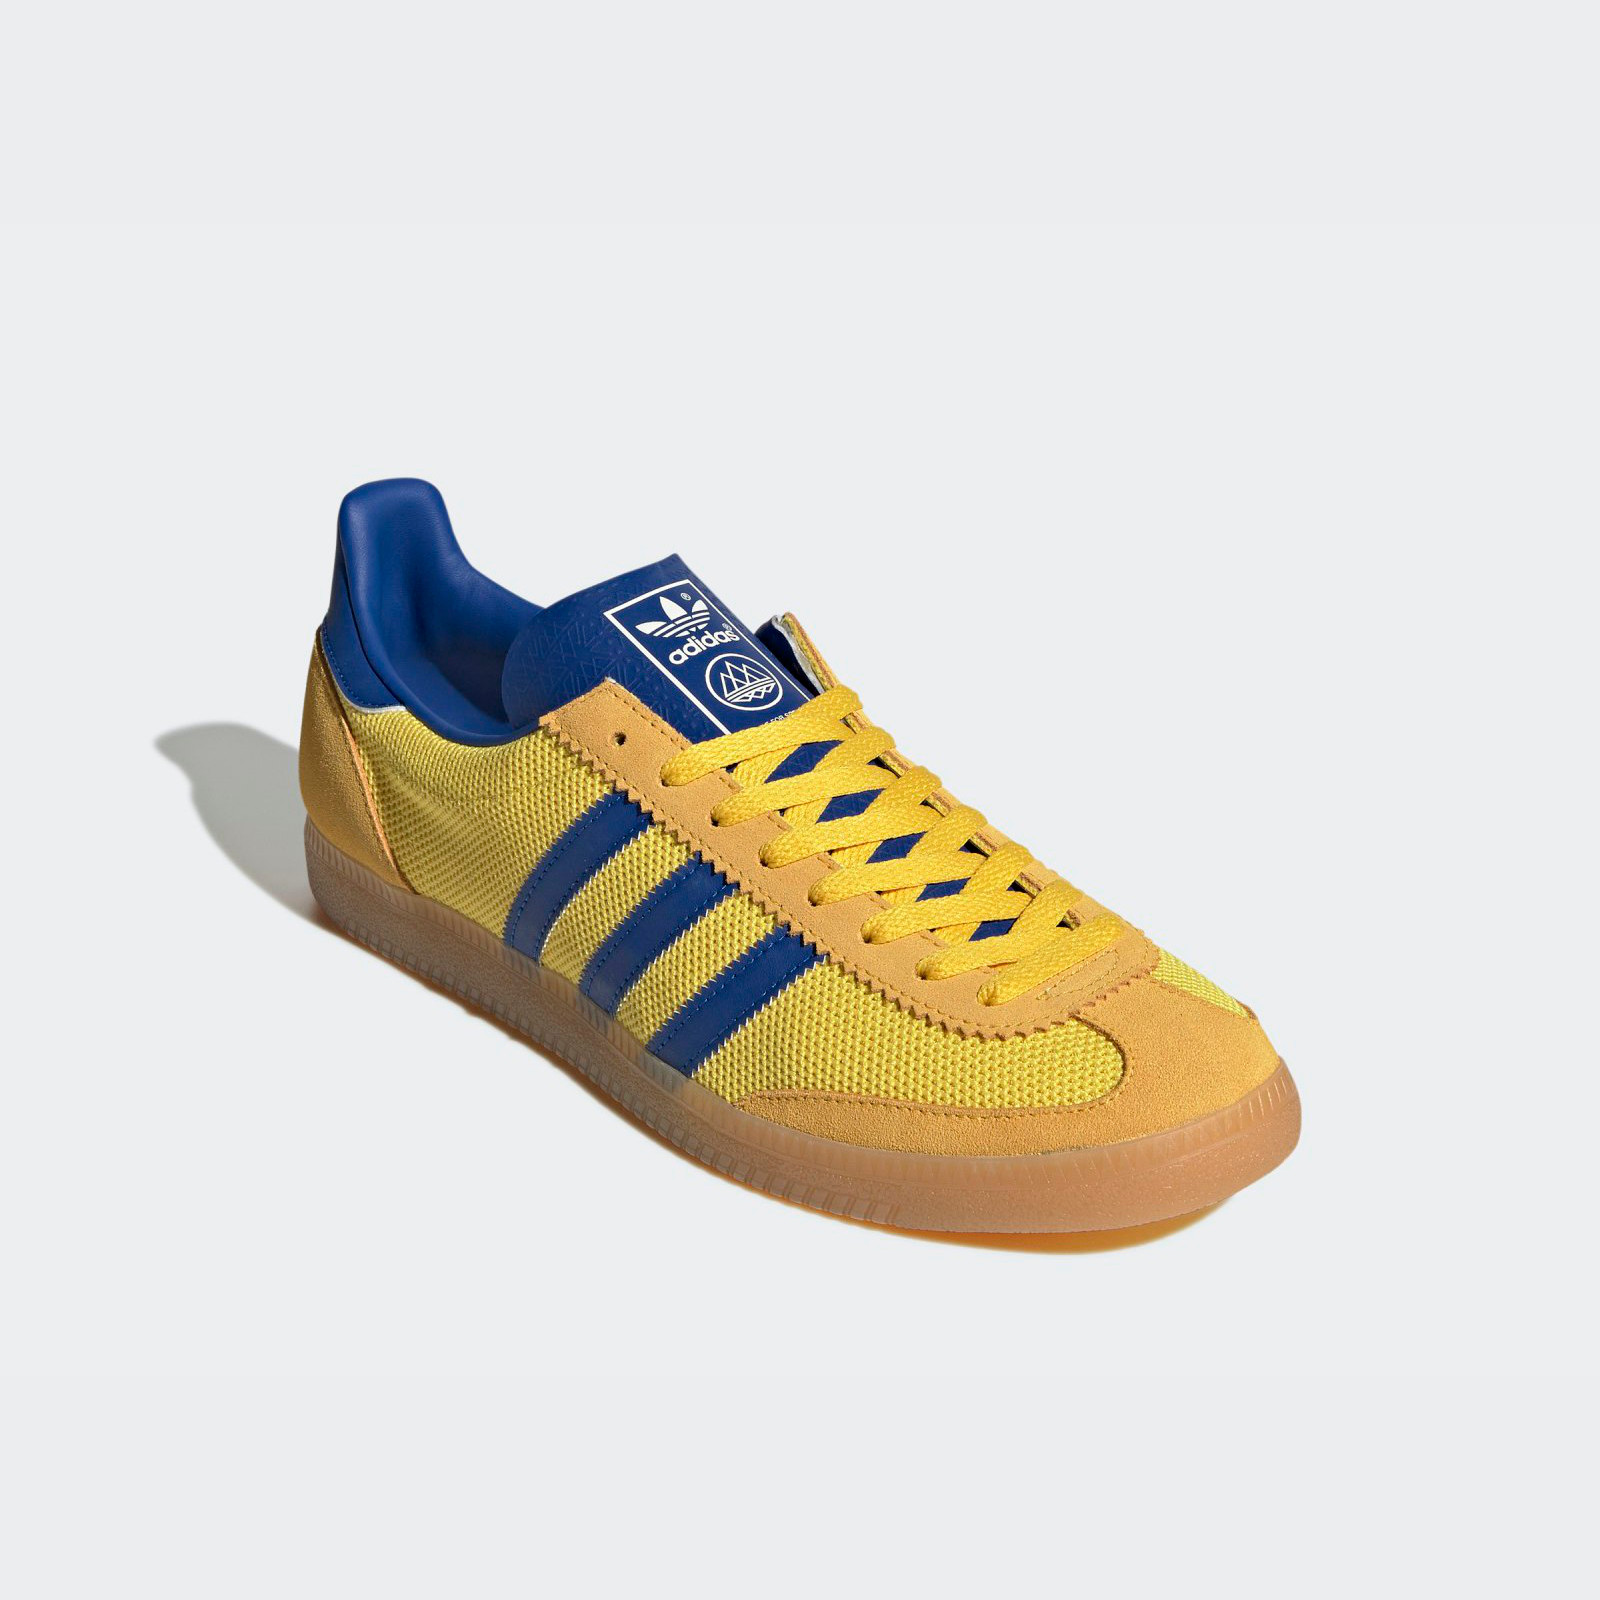 Adidas SPZL Malmo Net
Yellow / Blue